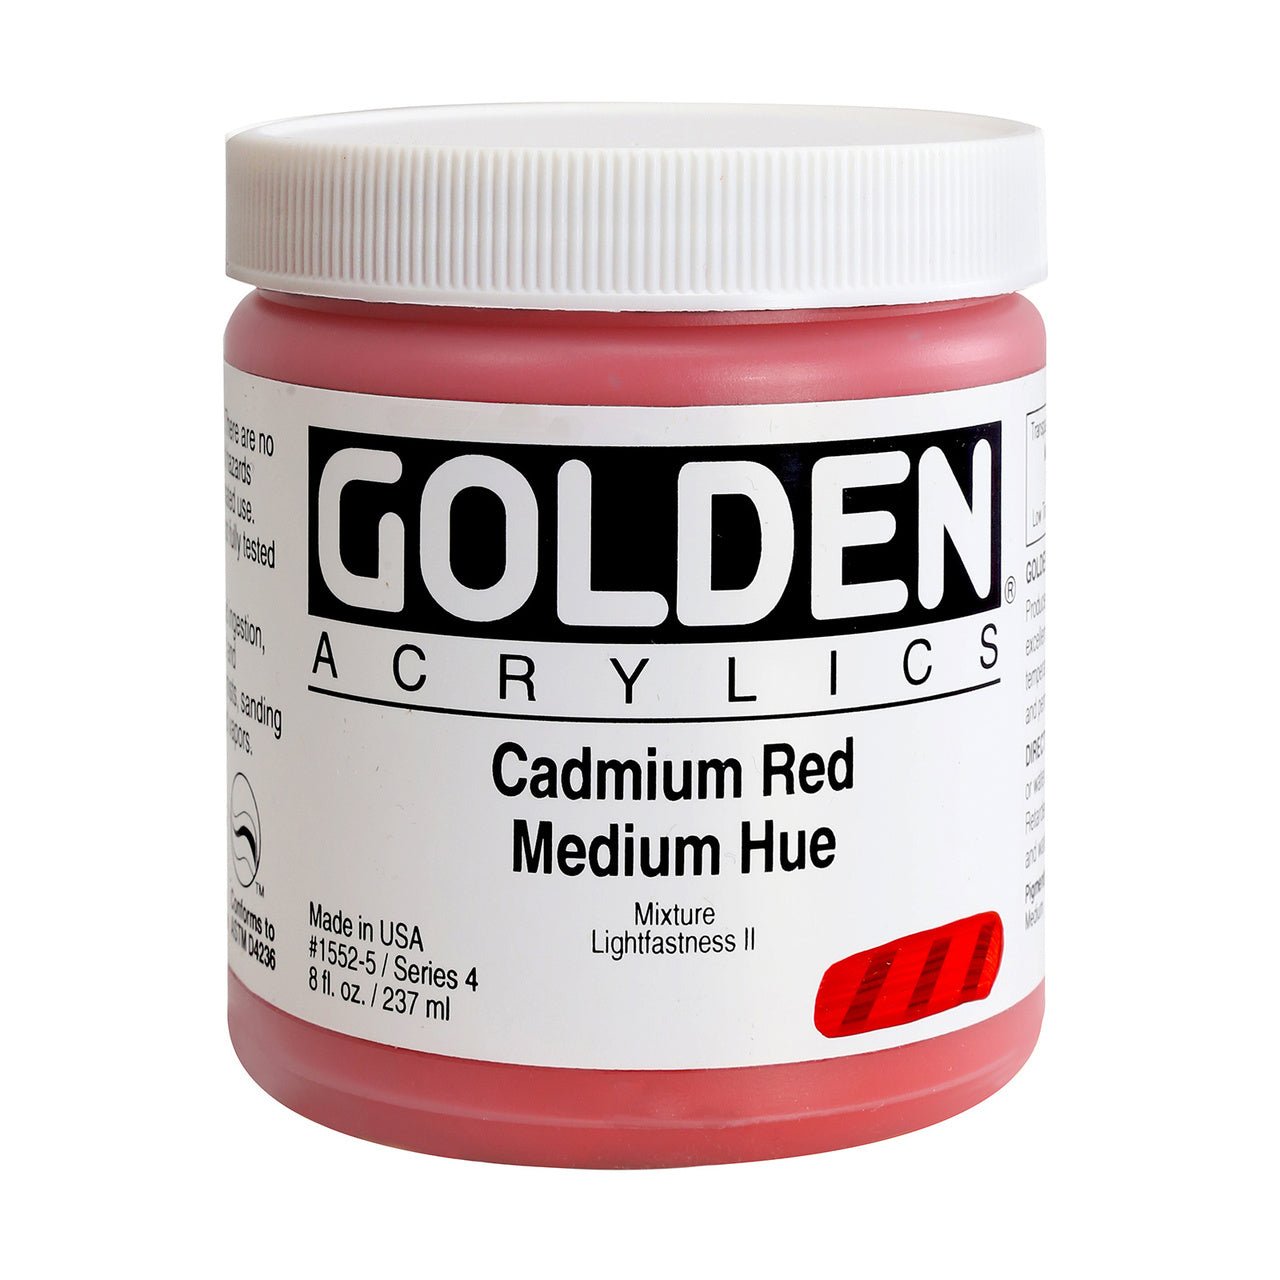 Golden Heavy Body Acrylic Cadmium Red Medium Hue 8 oz - merriartist.com